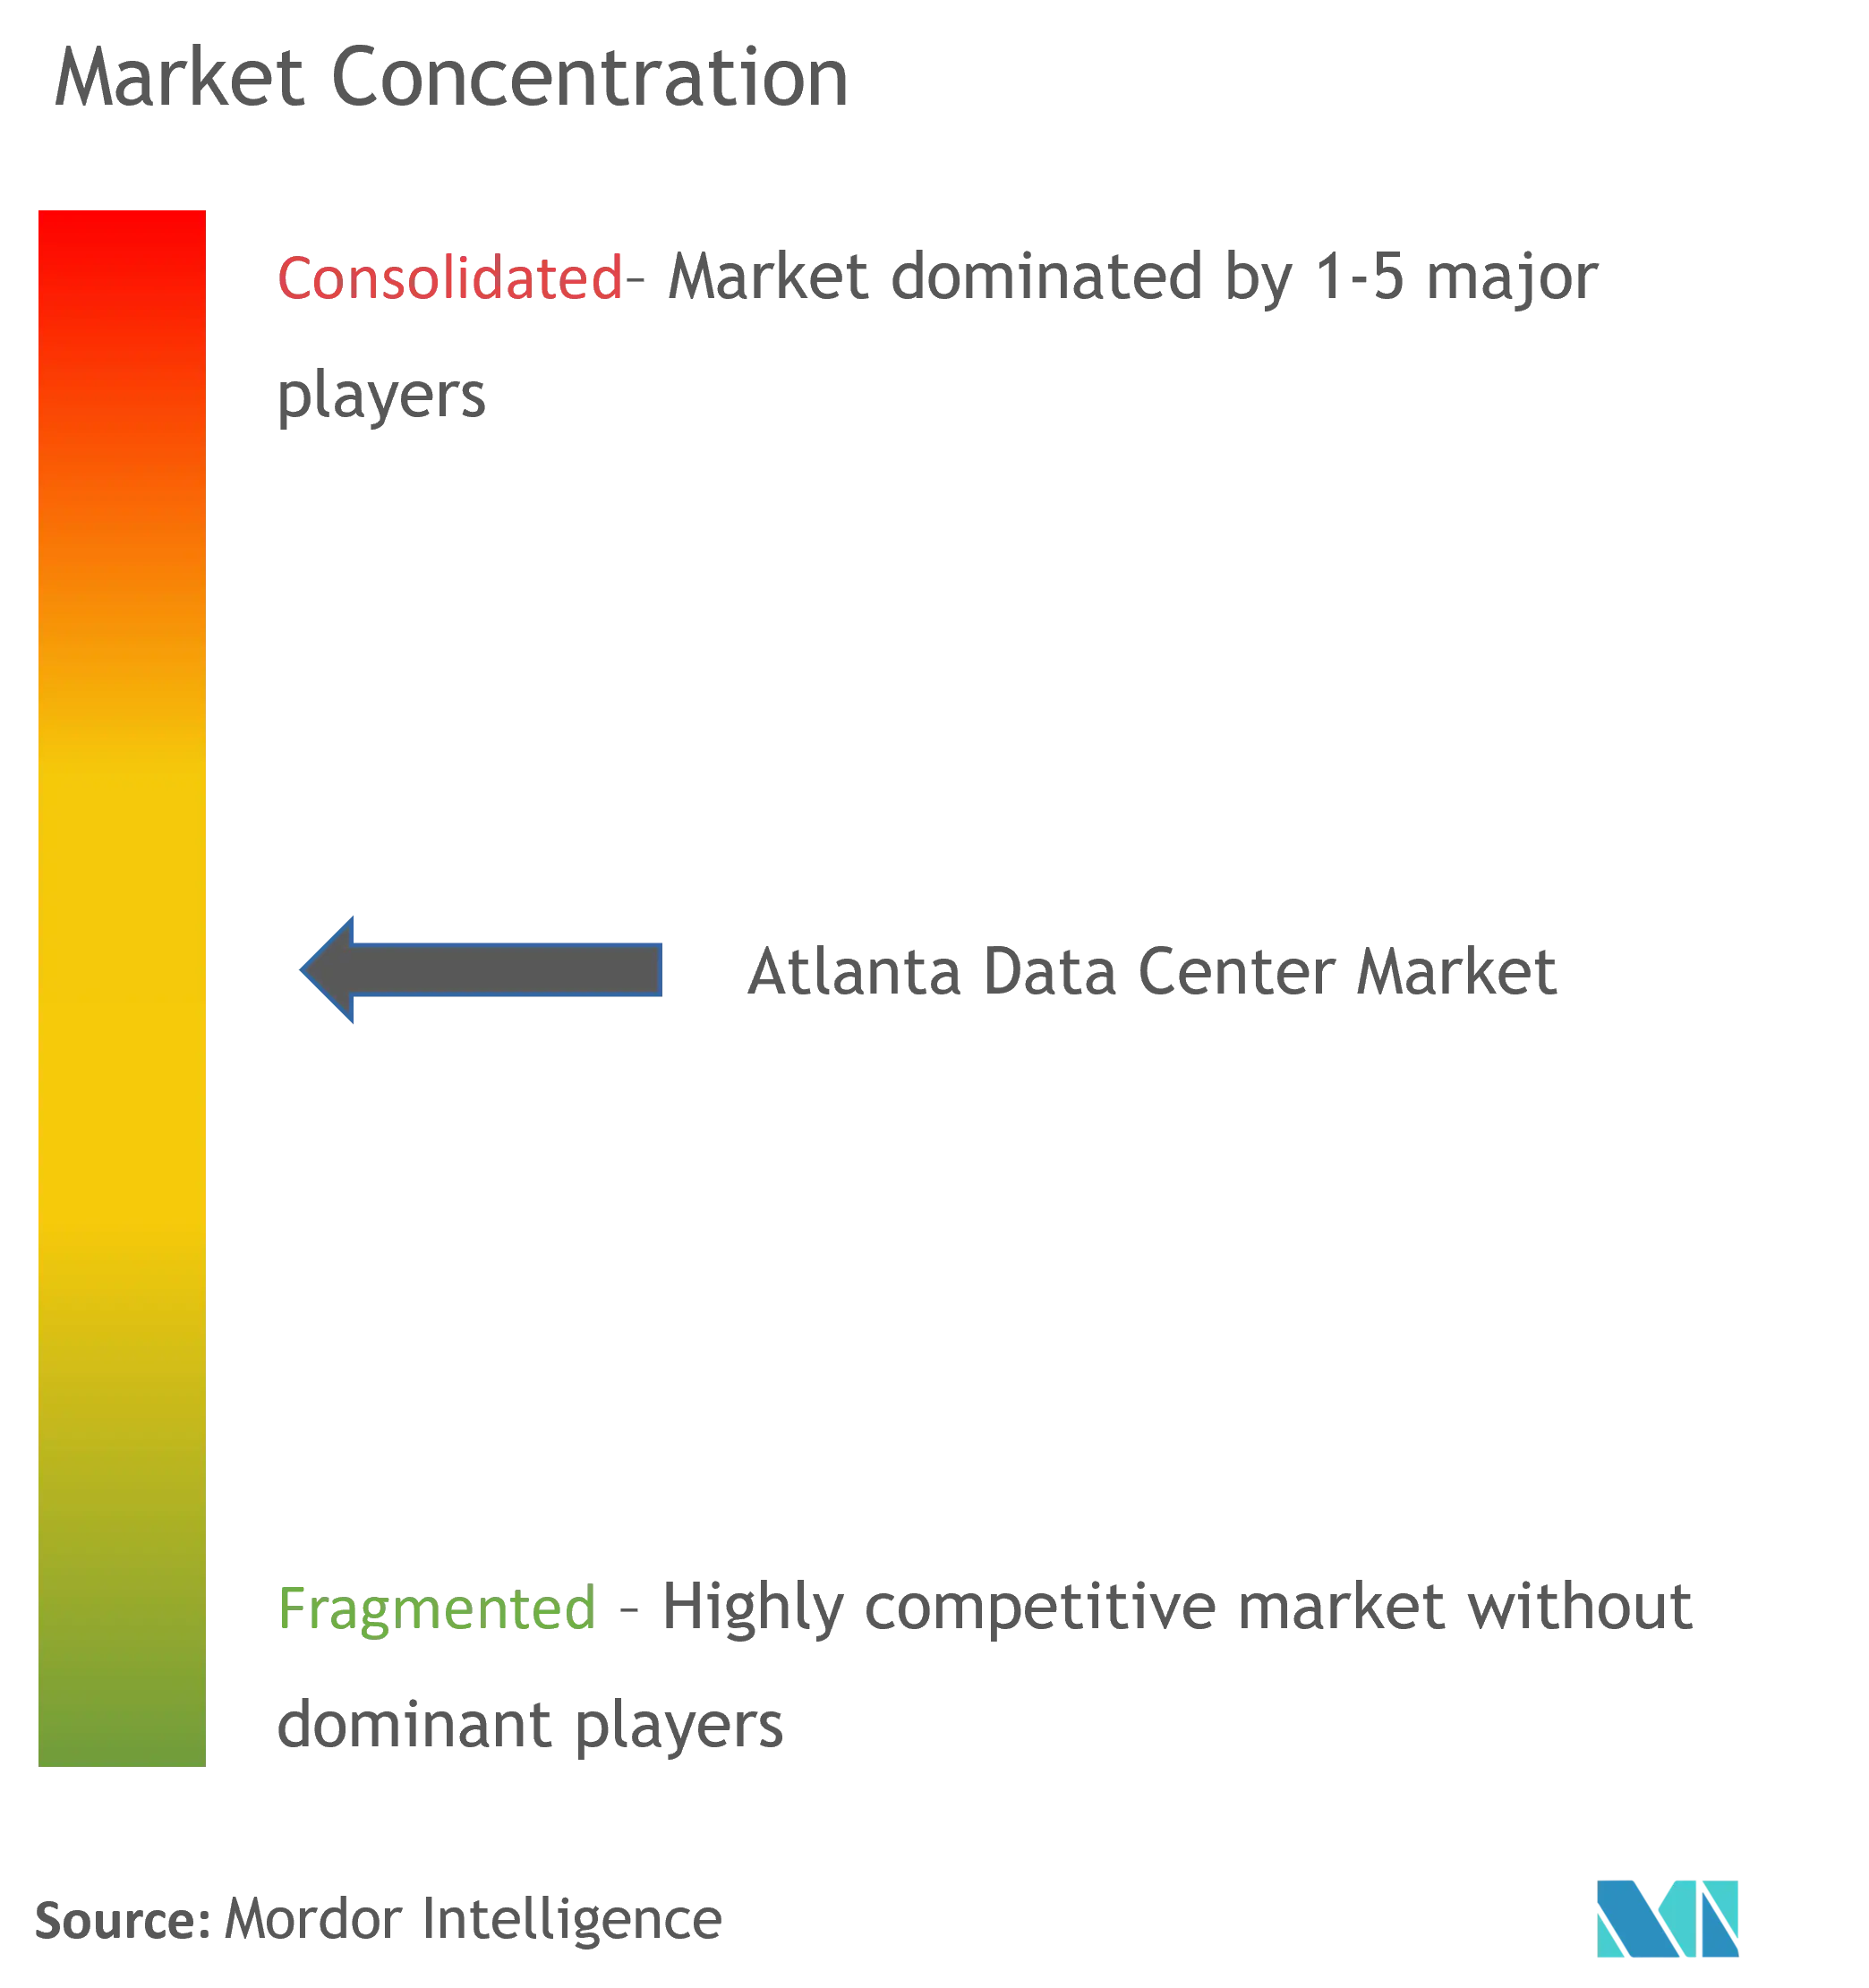 Atlanta Data Center Market  Concentration